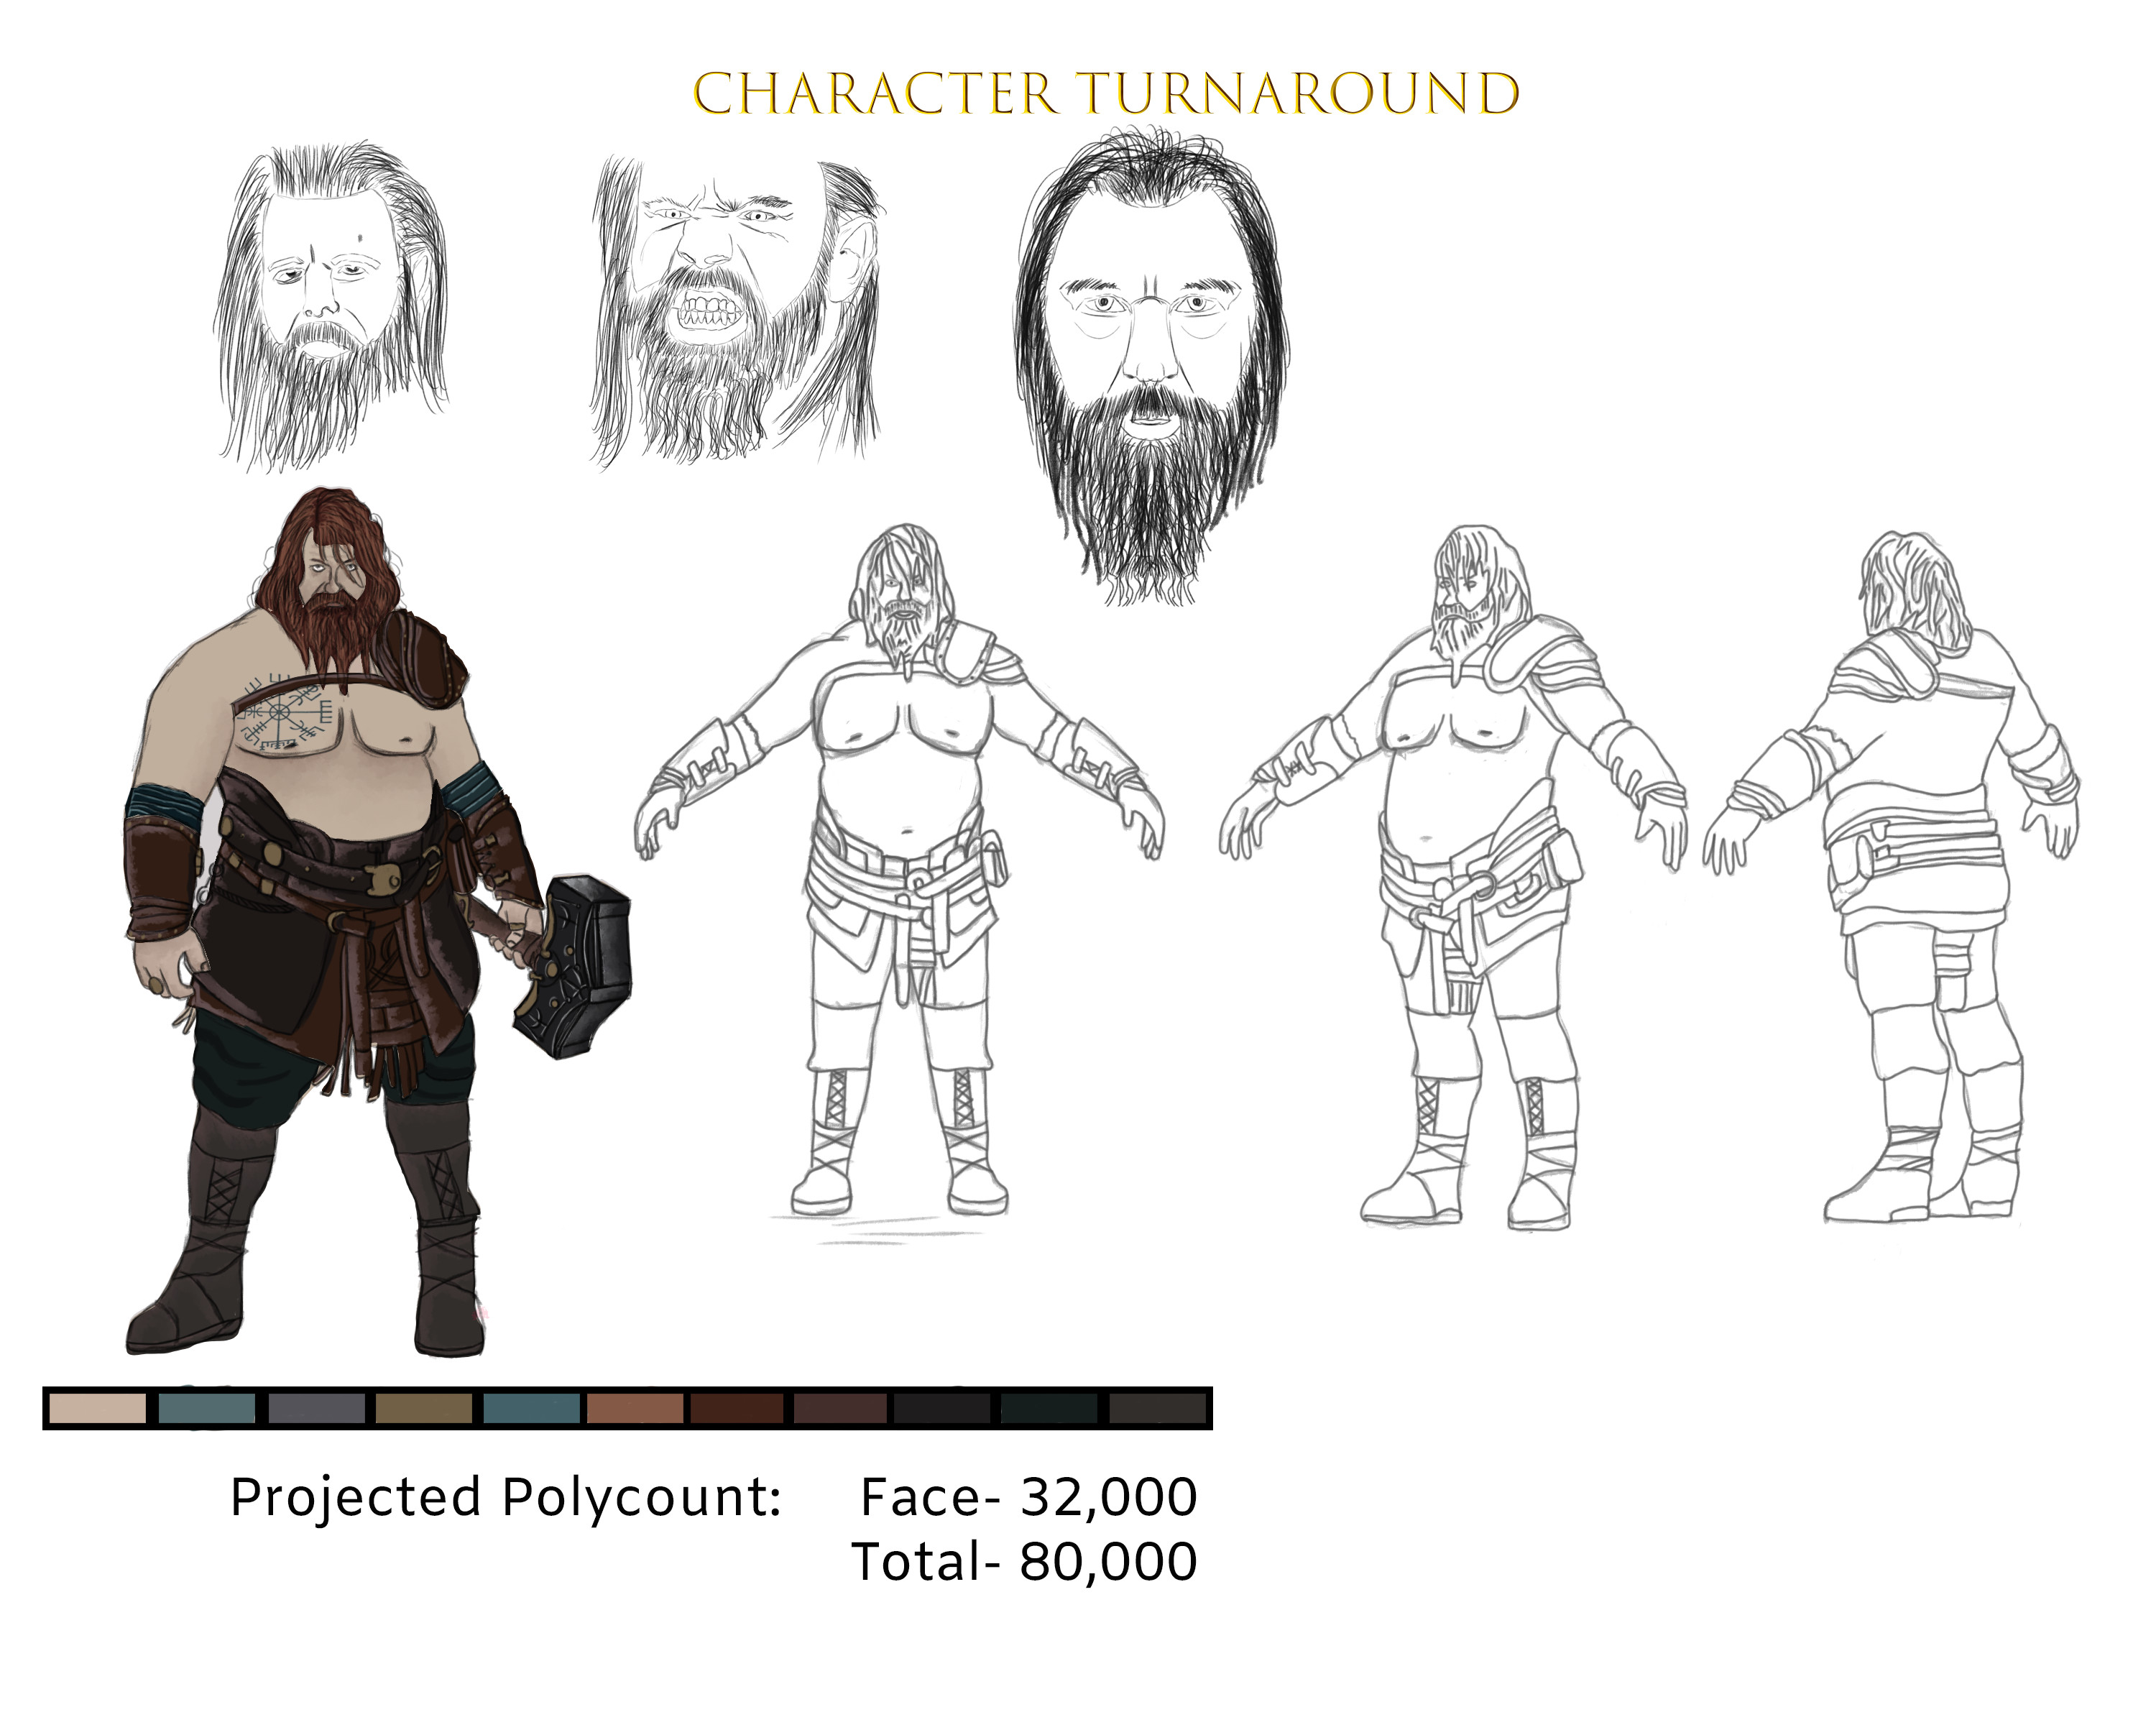 Thor - God of War Ragnarok by JohnHannon, Character Art, 3D